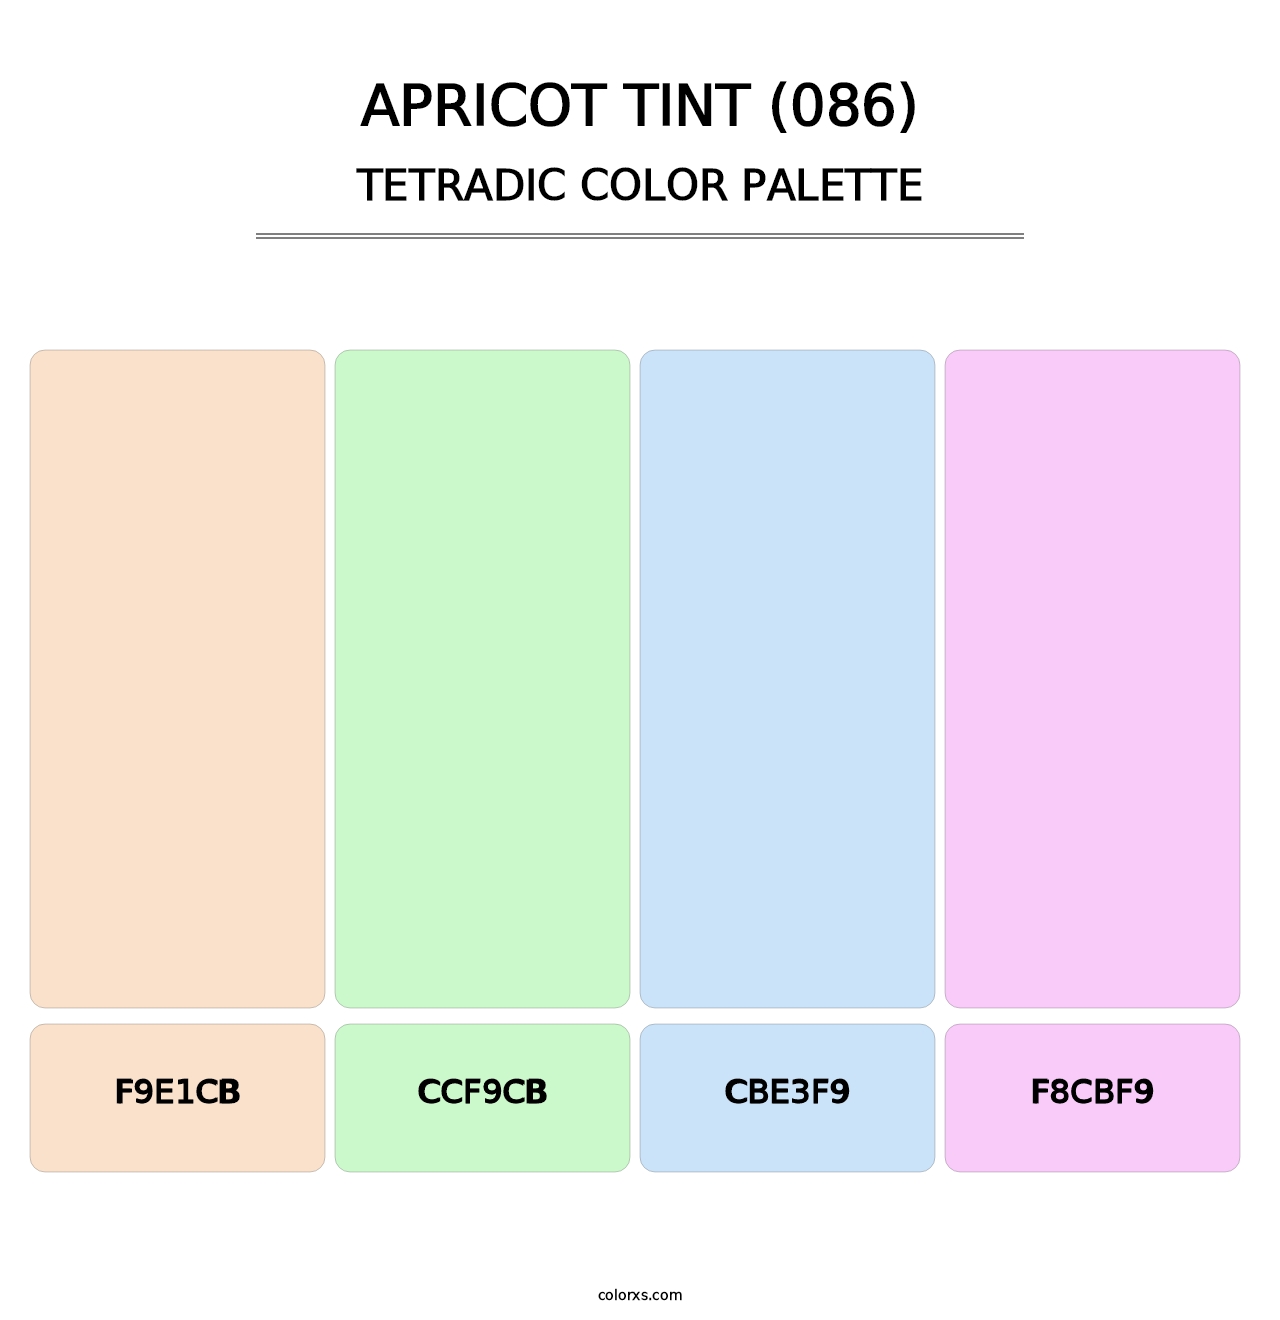 Apricot Tint (086) - Tetradic Color Palette